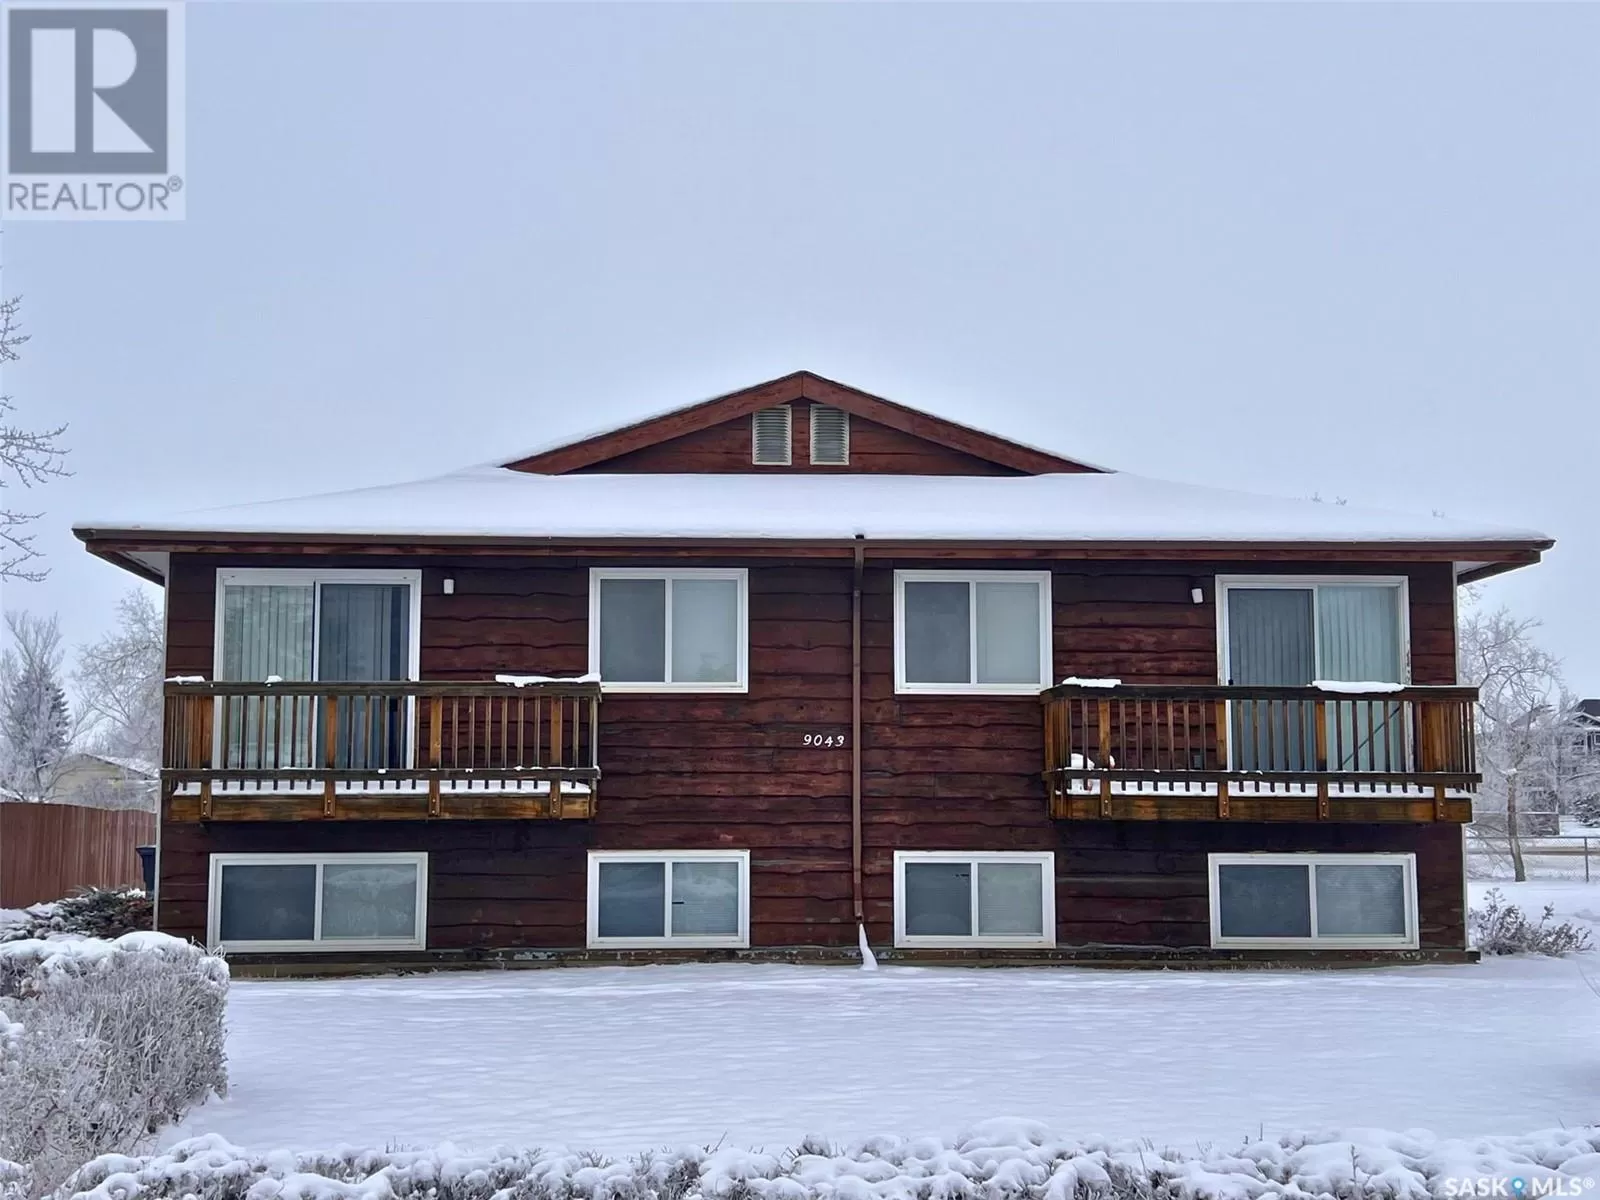 Fourplex for rent: 9043 Panton Avenue, North Battleford, Saskatchewan S9A 3J8